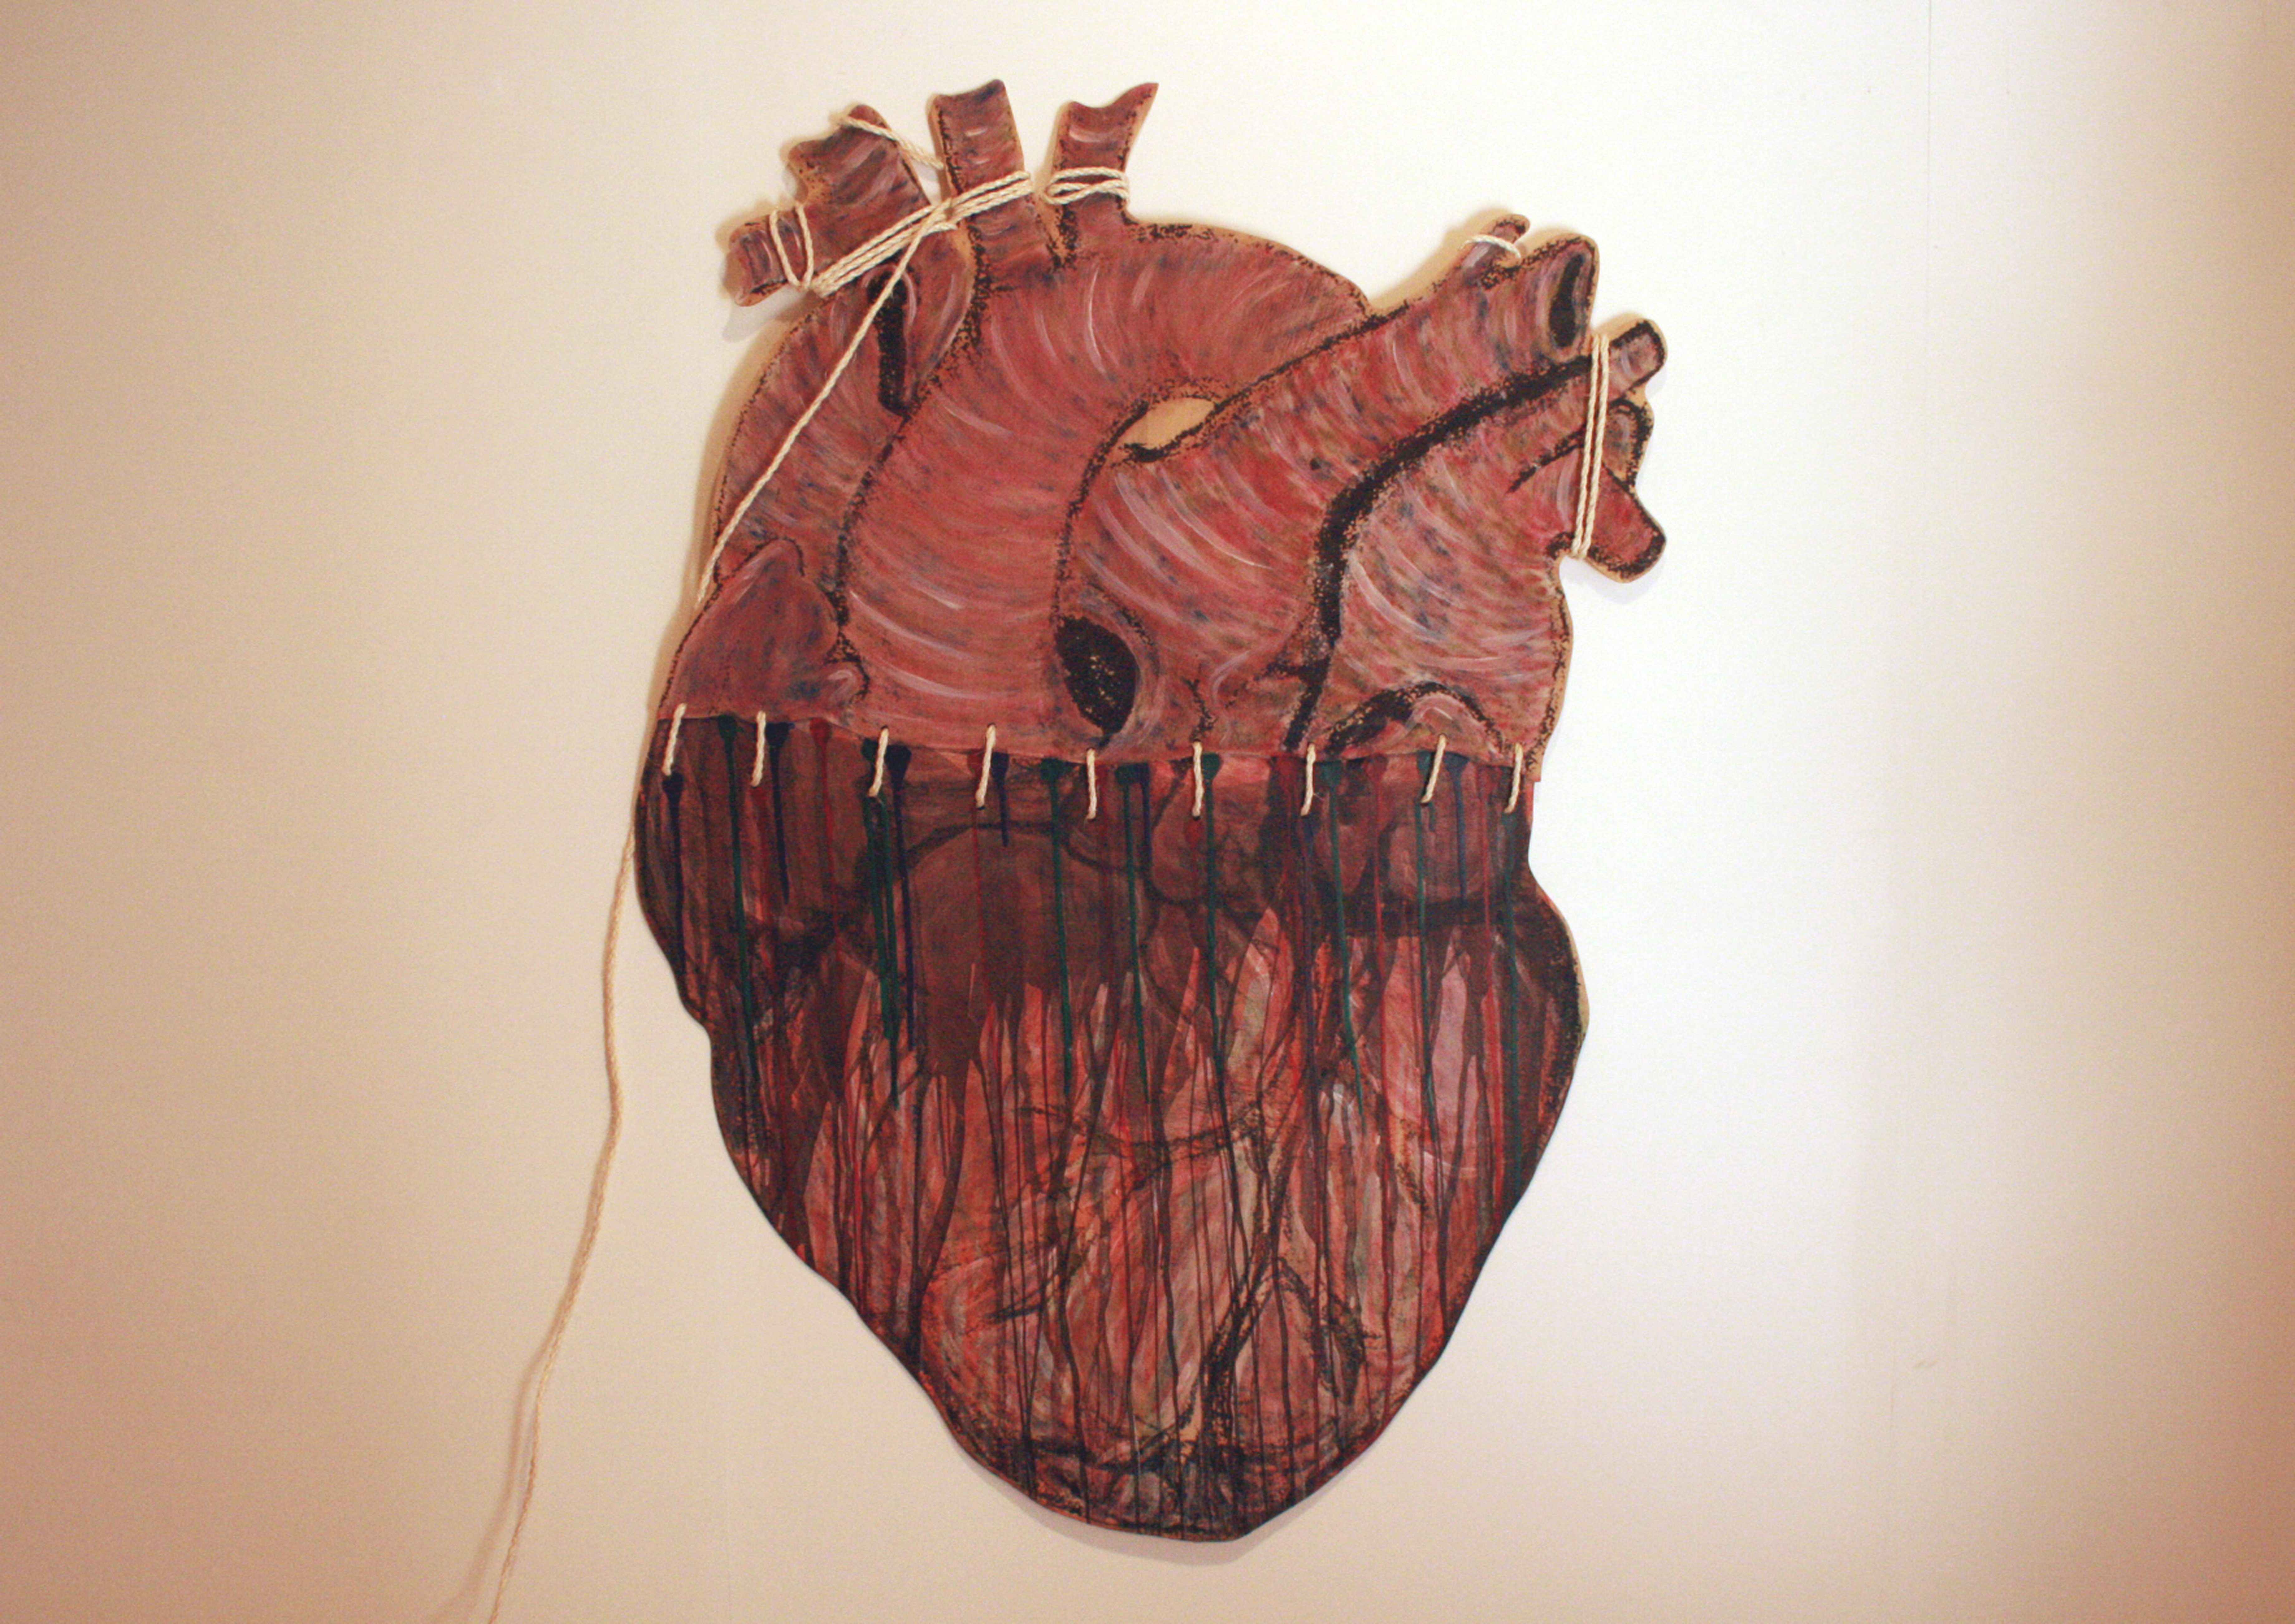 “Au coeur” de l’Art de Khawla Darwish